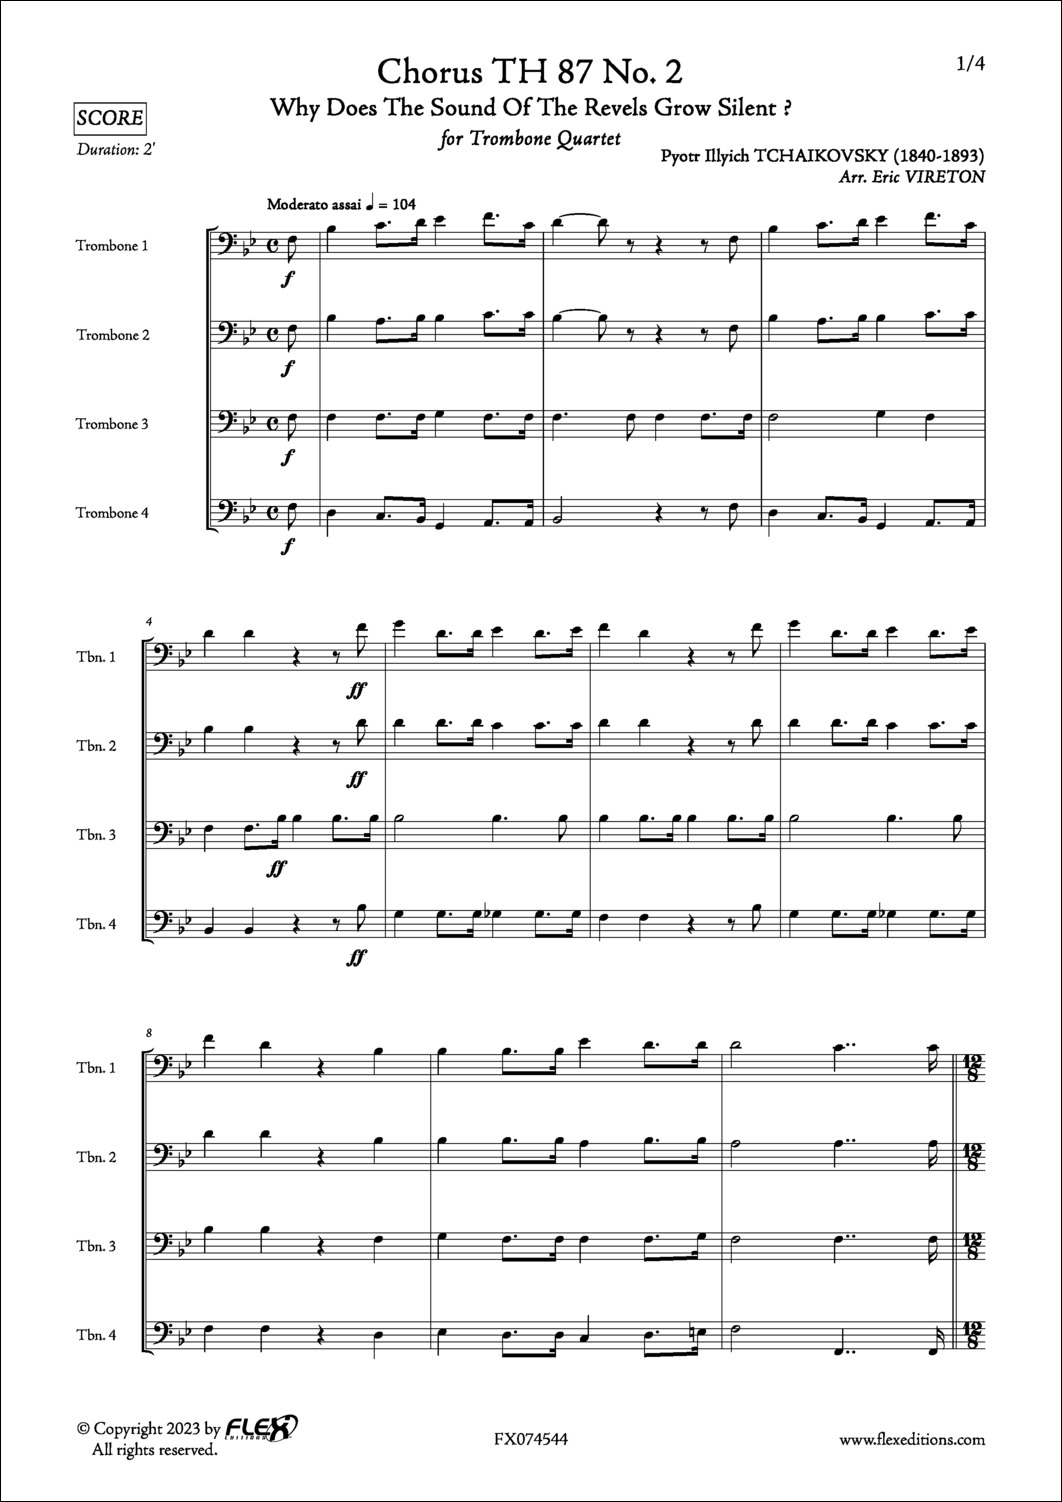 Chorus TH 87 No. 2 - P. I. TCHAIKOVSKY - <font color=#666666>Trombone Quartet</font>